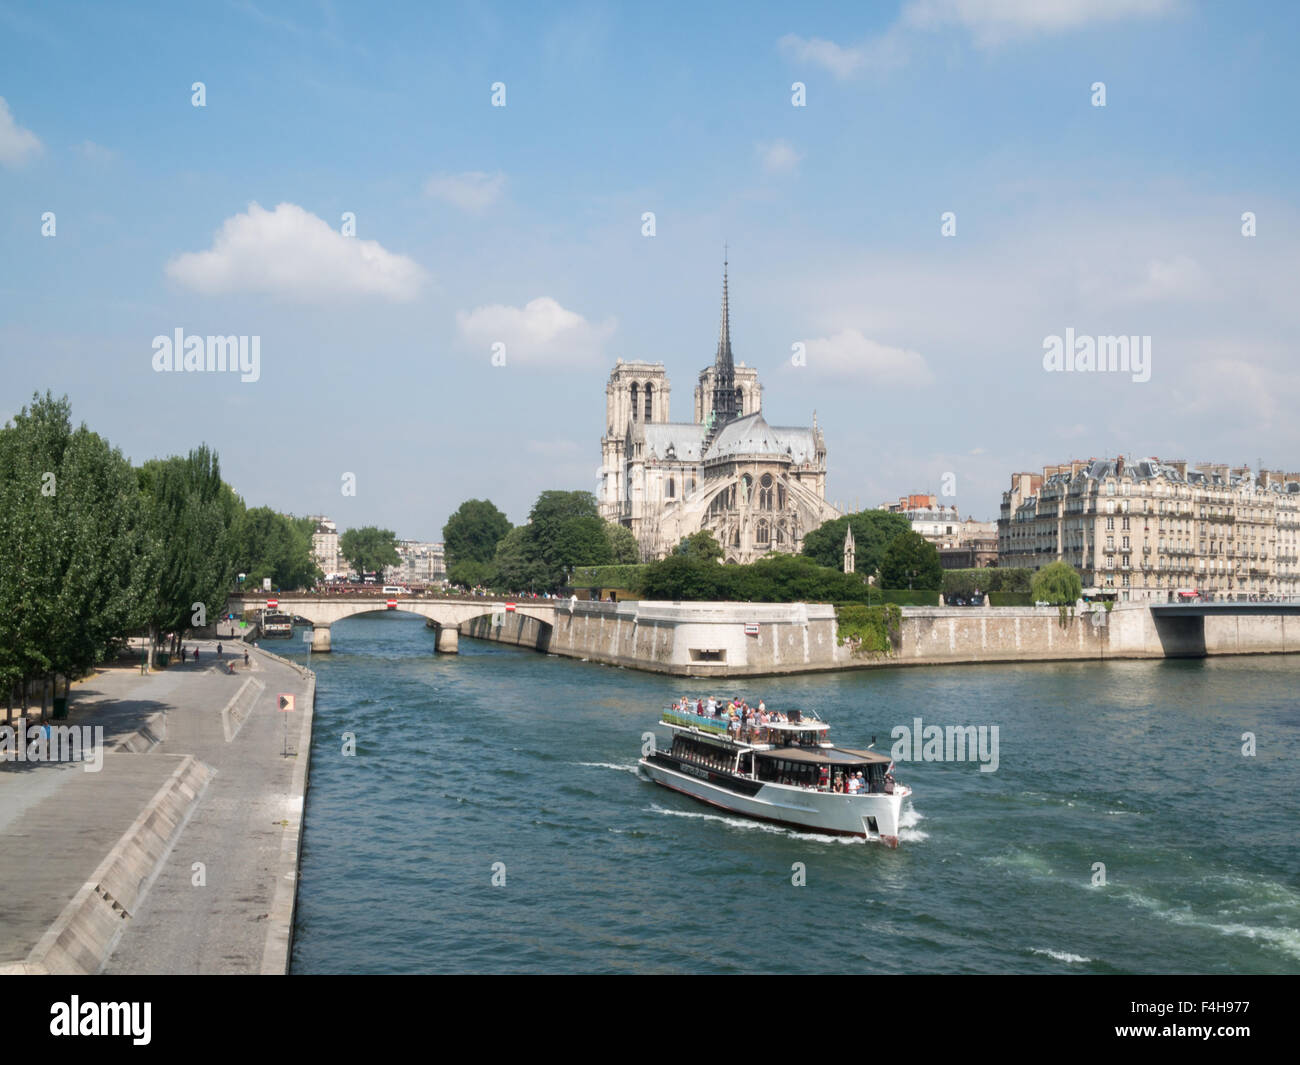 Notre-Dame de Paris and a boat on the Seine river Stock Photo